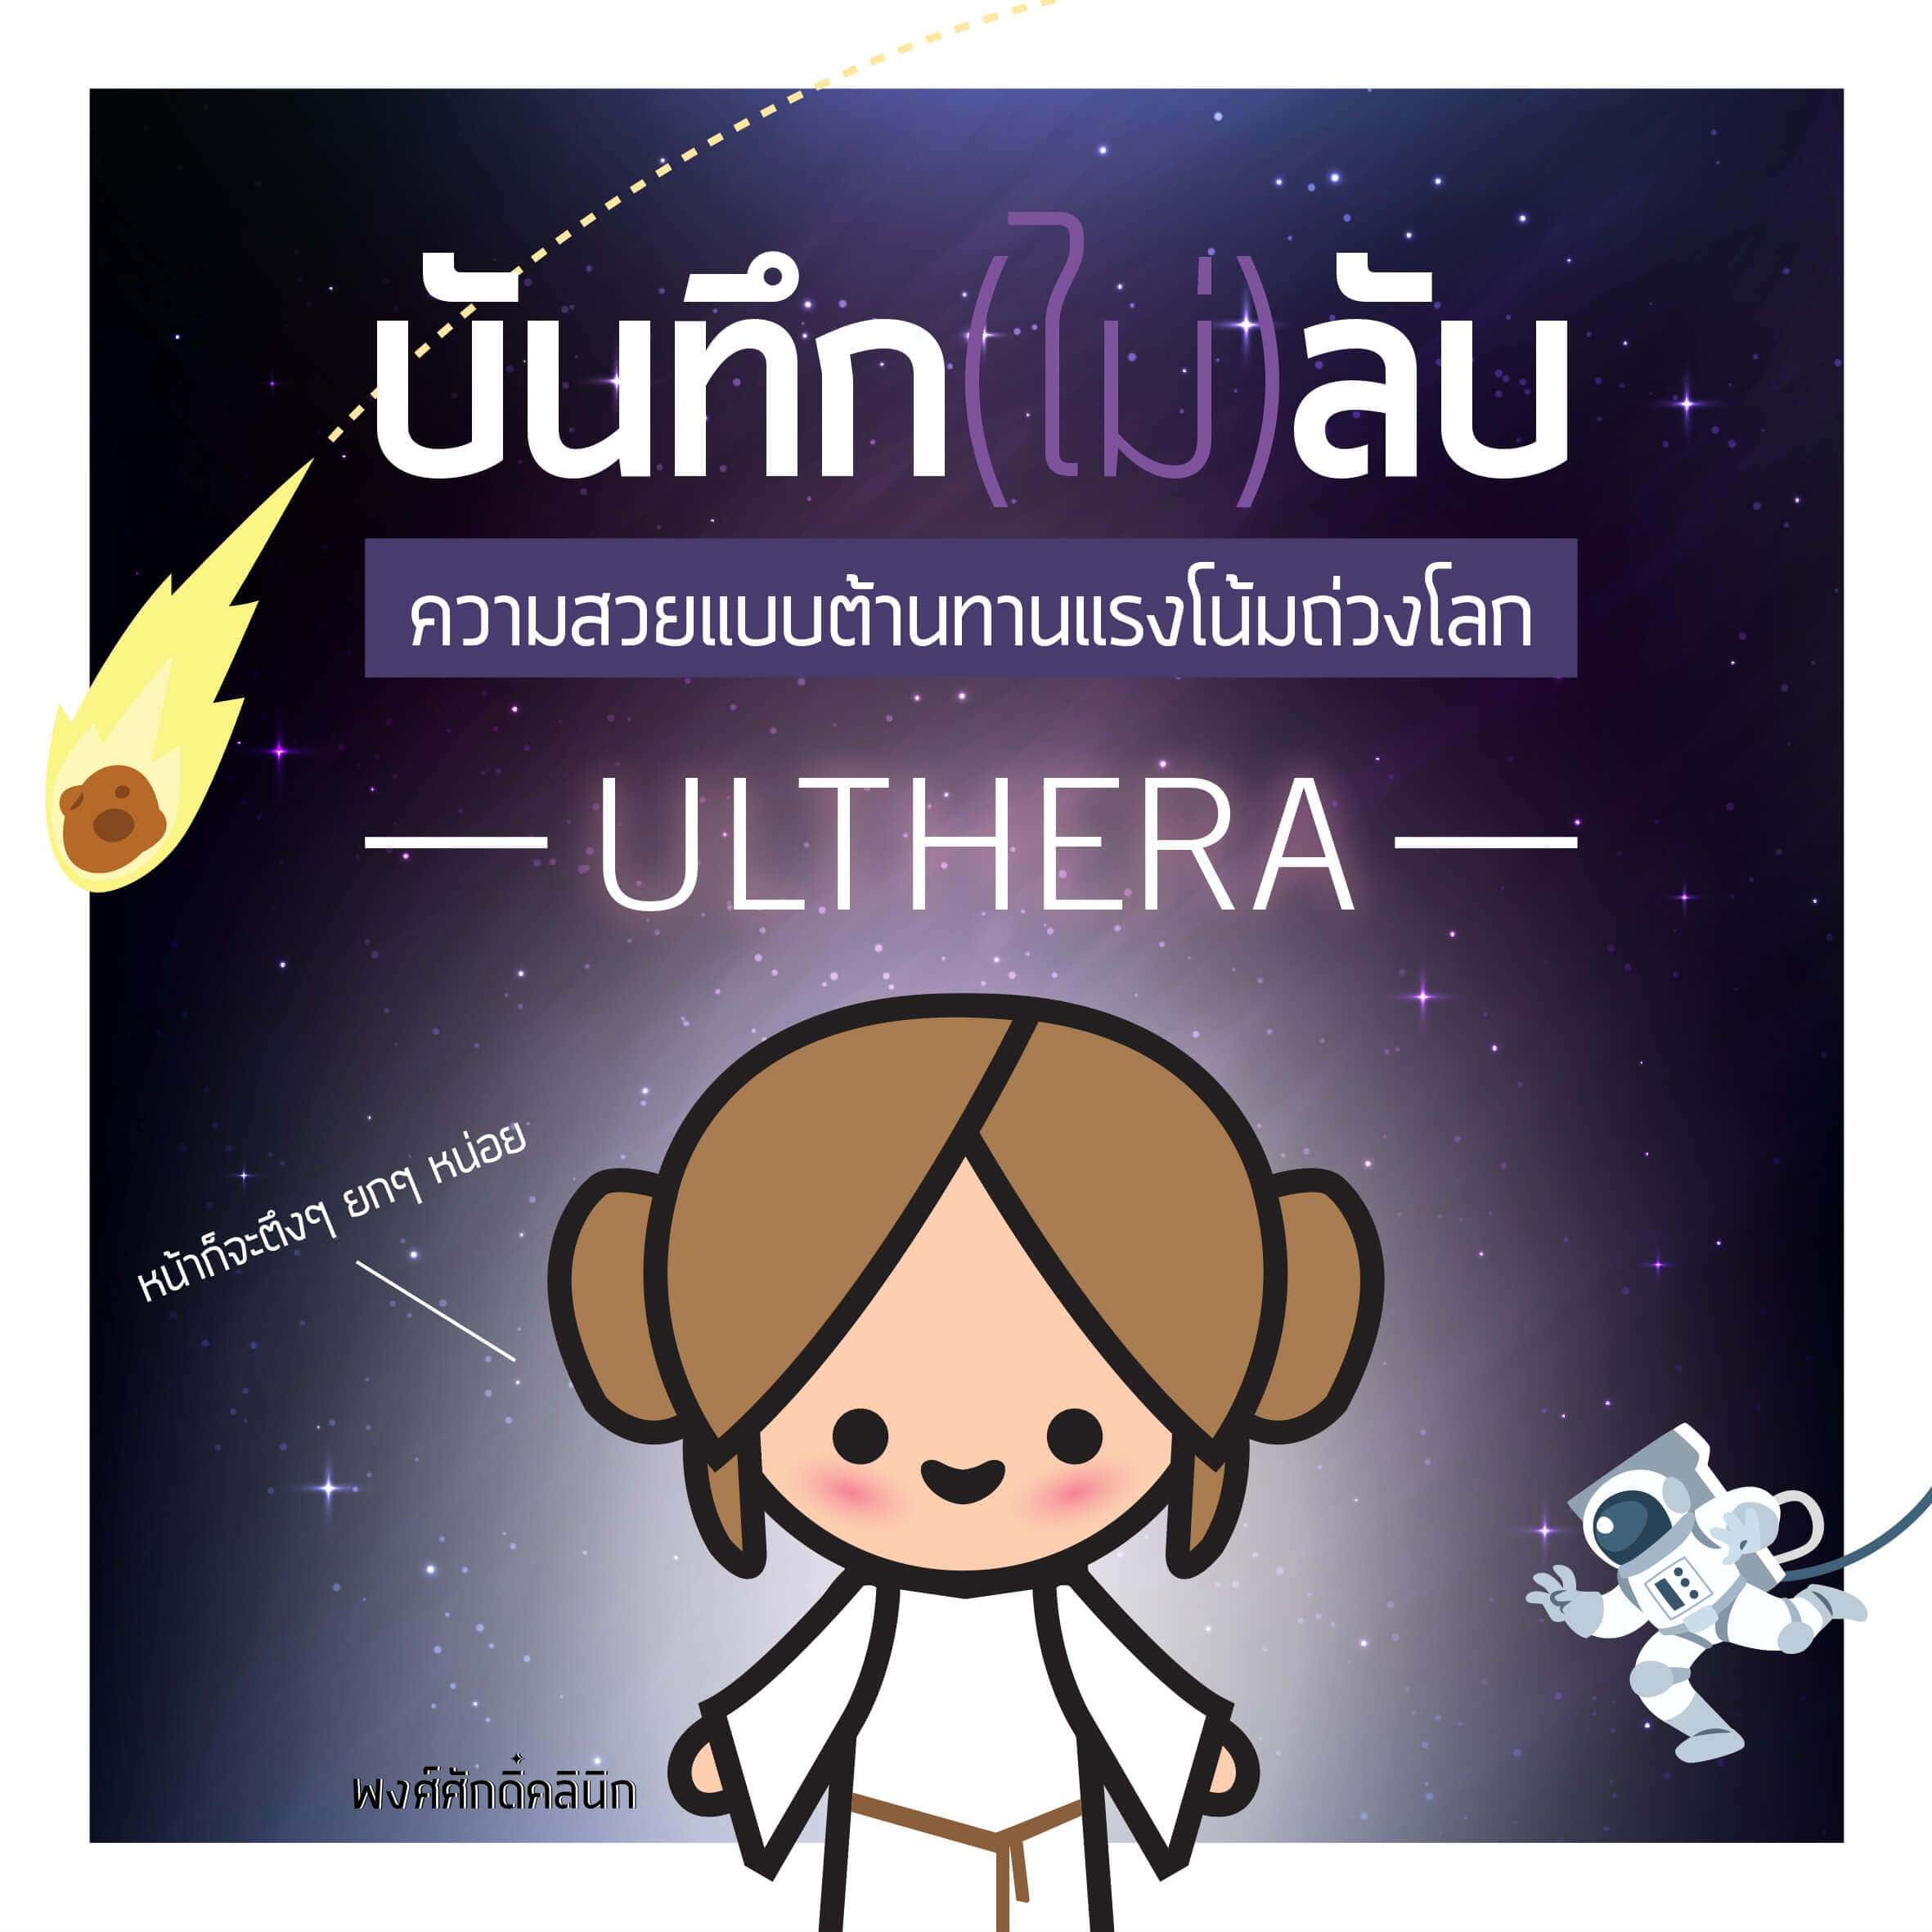 ulthera, ulthera ที่ไหนดี, ulthera ที่ไหนดี 2022, ulthera คือ, ulthera ราคา, ulthera pantip, hifu vs ulthera, ulthera promotion ราคา, ulthera ราคา apex, ulthera treatment, ulthera review, ulthera deepsee transducer, thermage ulthera pantip, ulthera promotion, ยกกระชับหน้า, อัลเทอร่า, กรอบหน้า, แก้ตาตก, แก้หนังตาตก, แก้หางตาตก, คิ้วตก